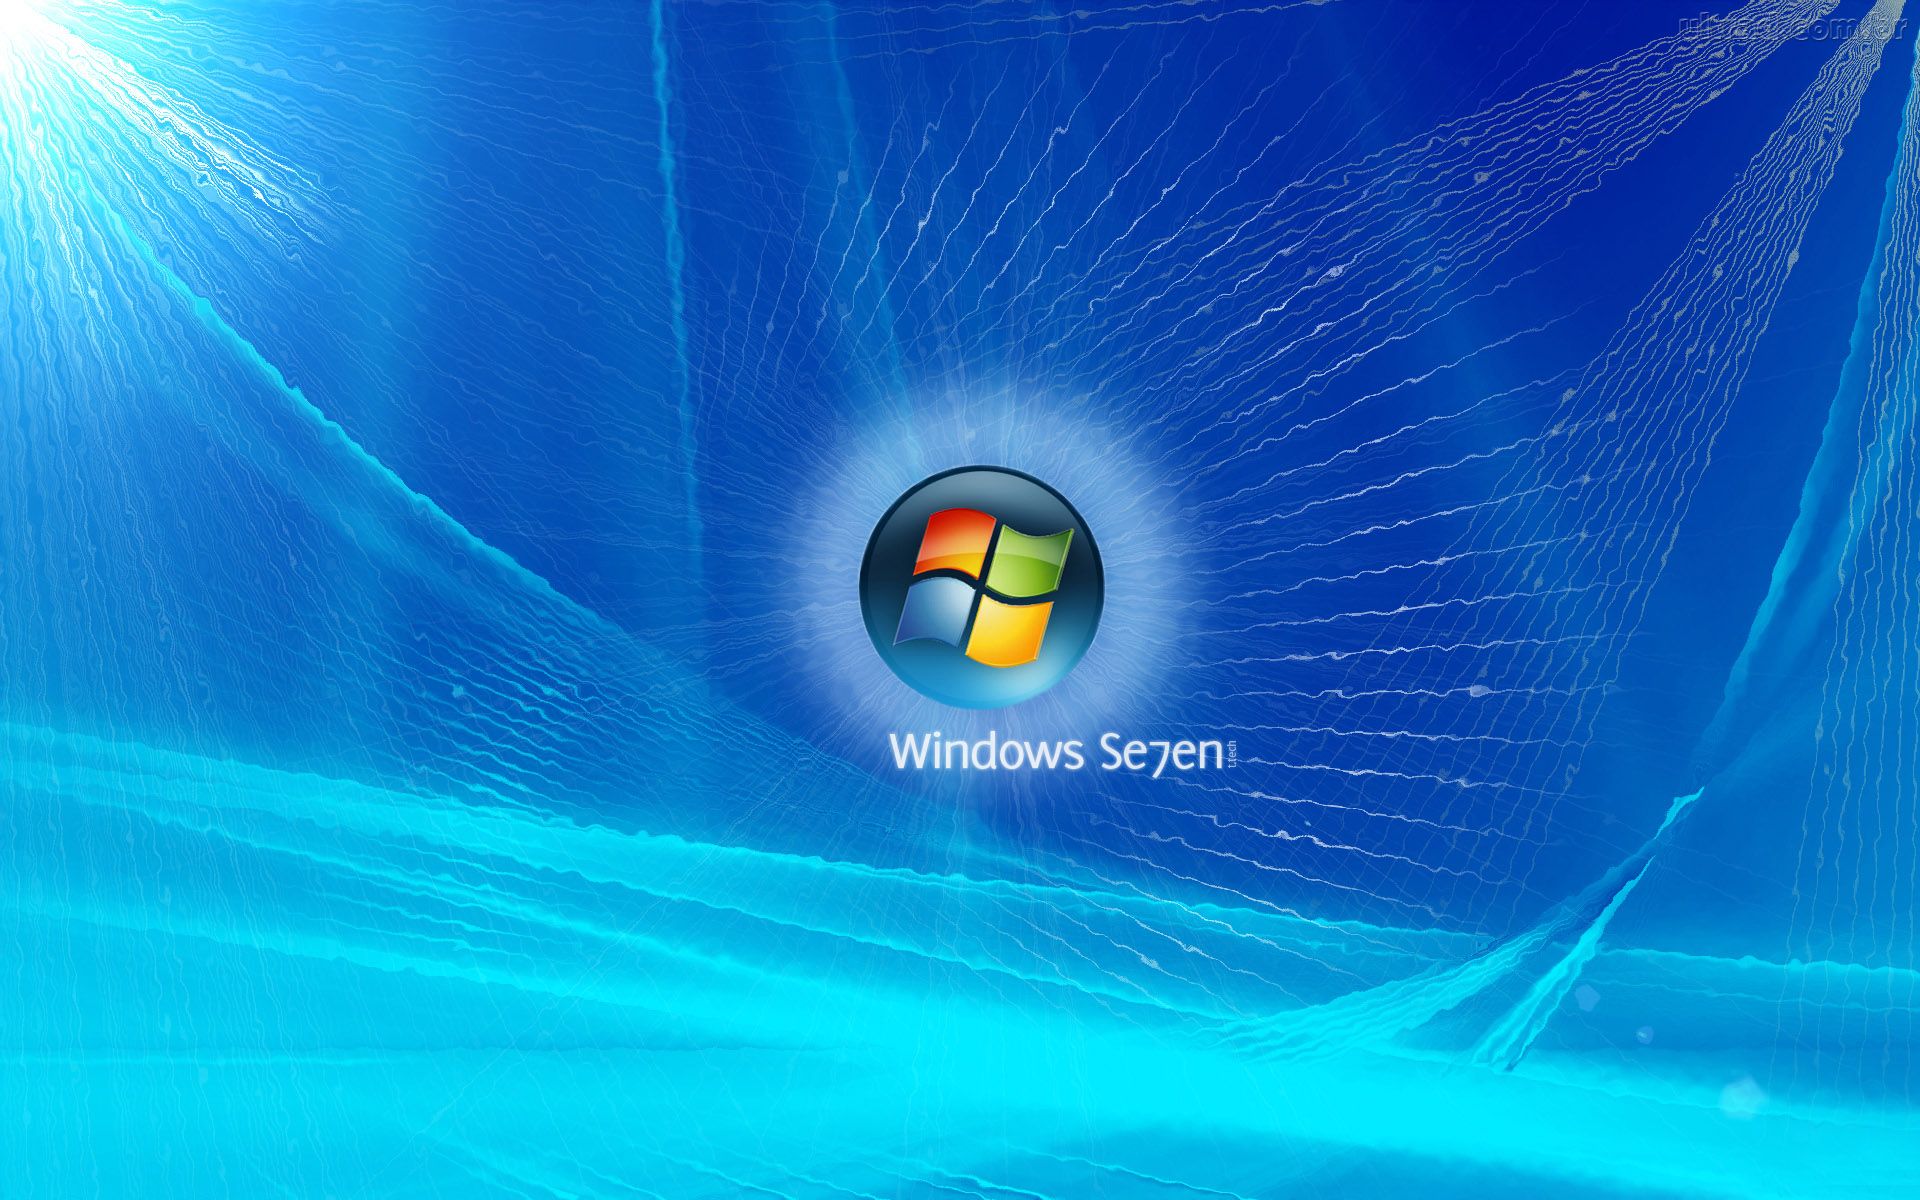 Windows XP background in real life | TikTok